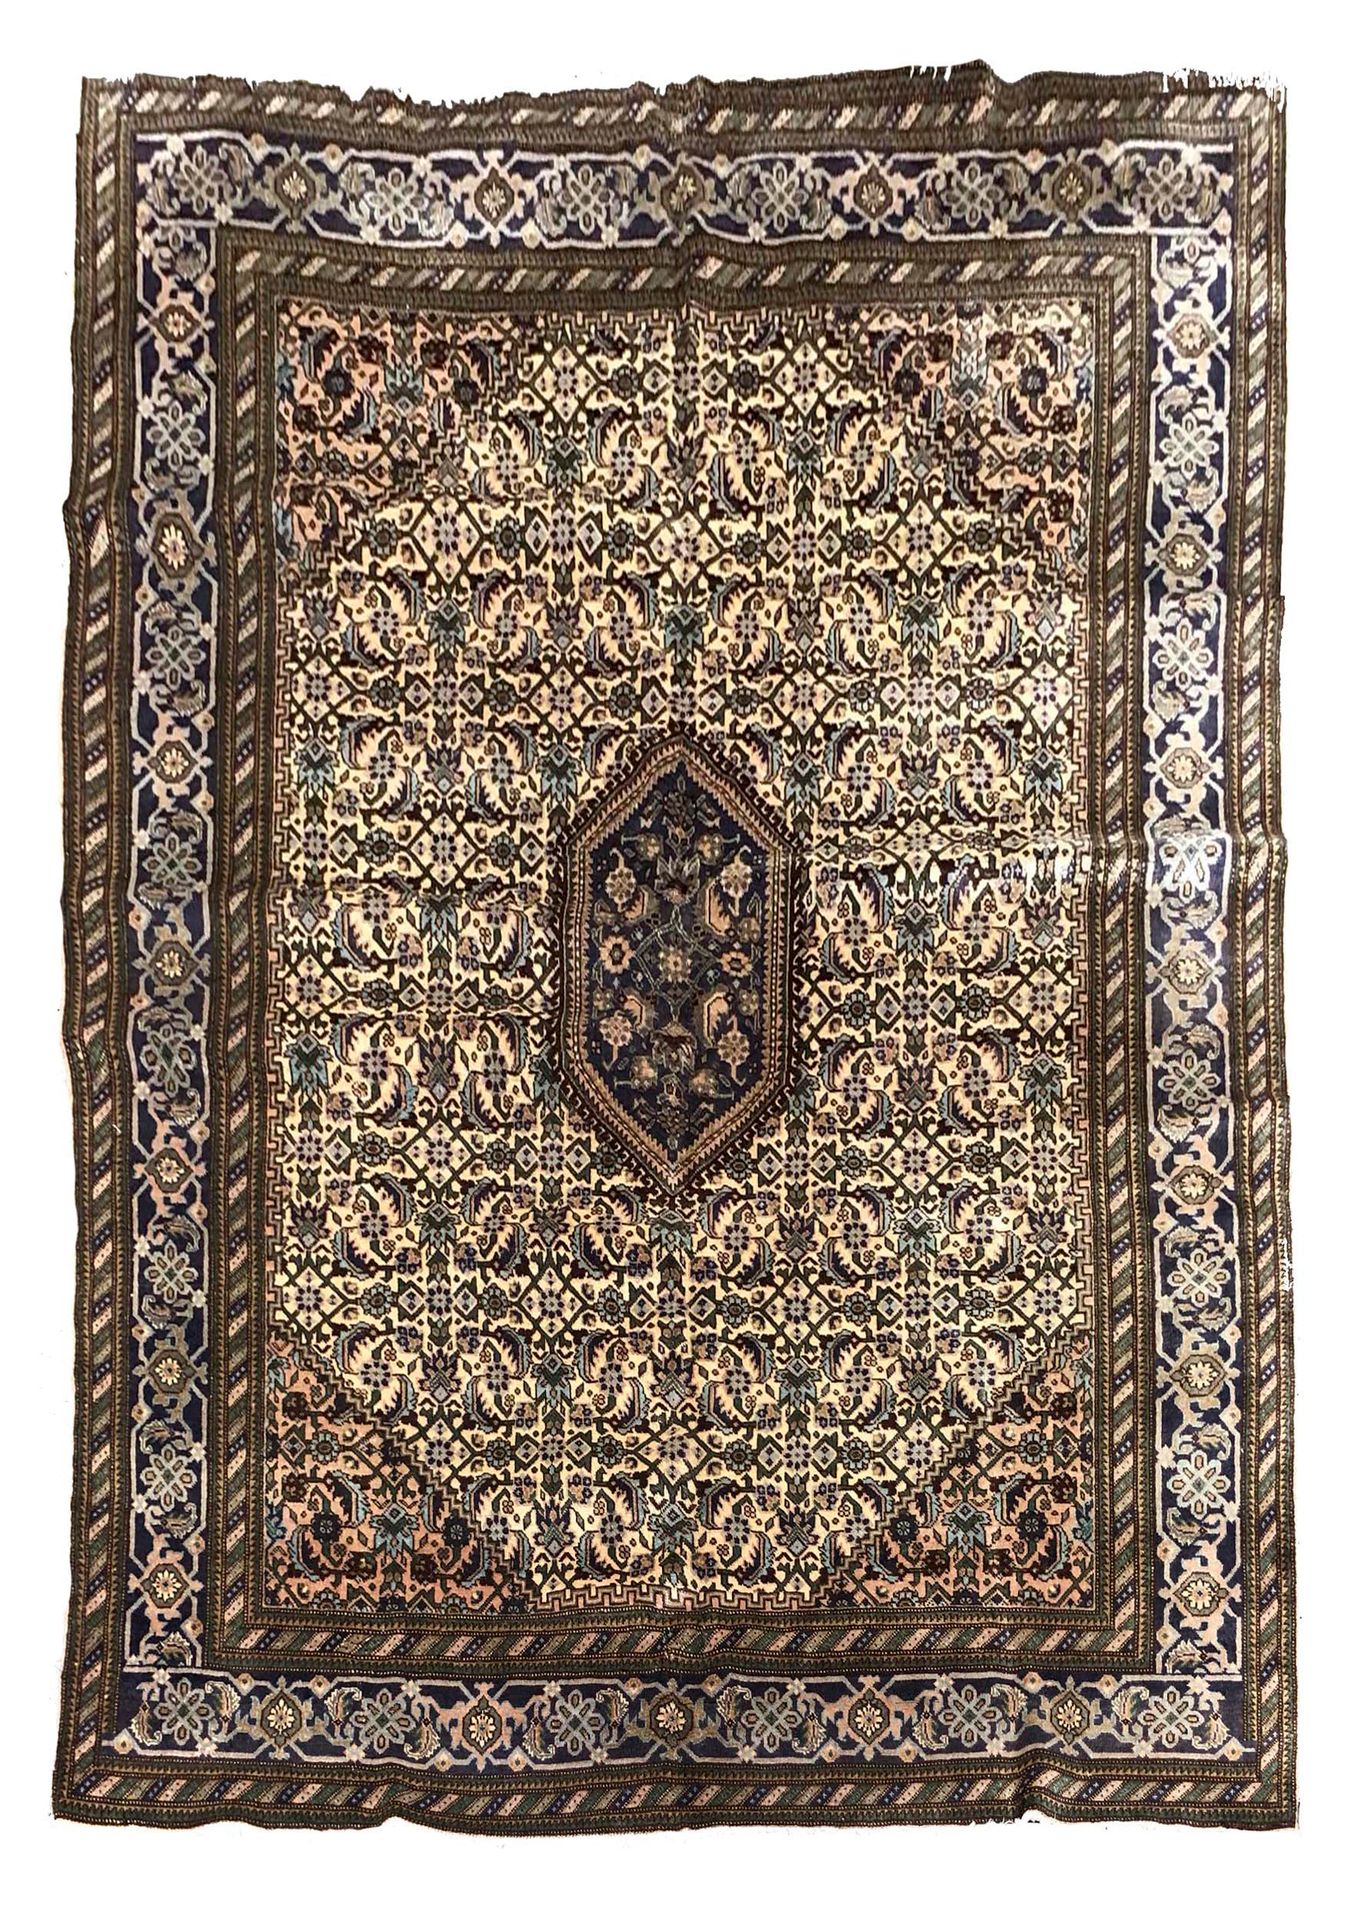 Null MÉCHKINE carpet (Iran), mid 20th century

Dimensions : 311 x 228cm.

Techni&hellip;